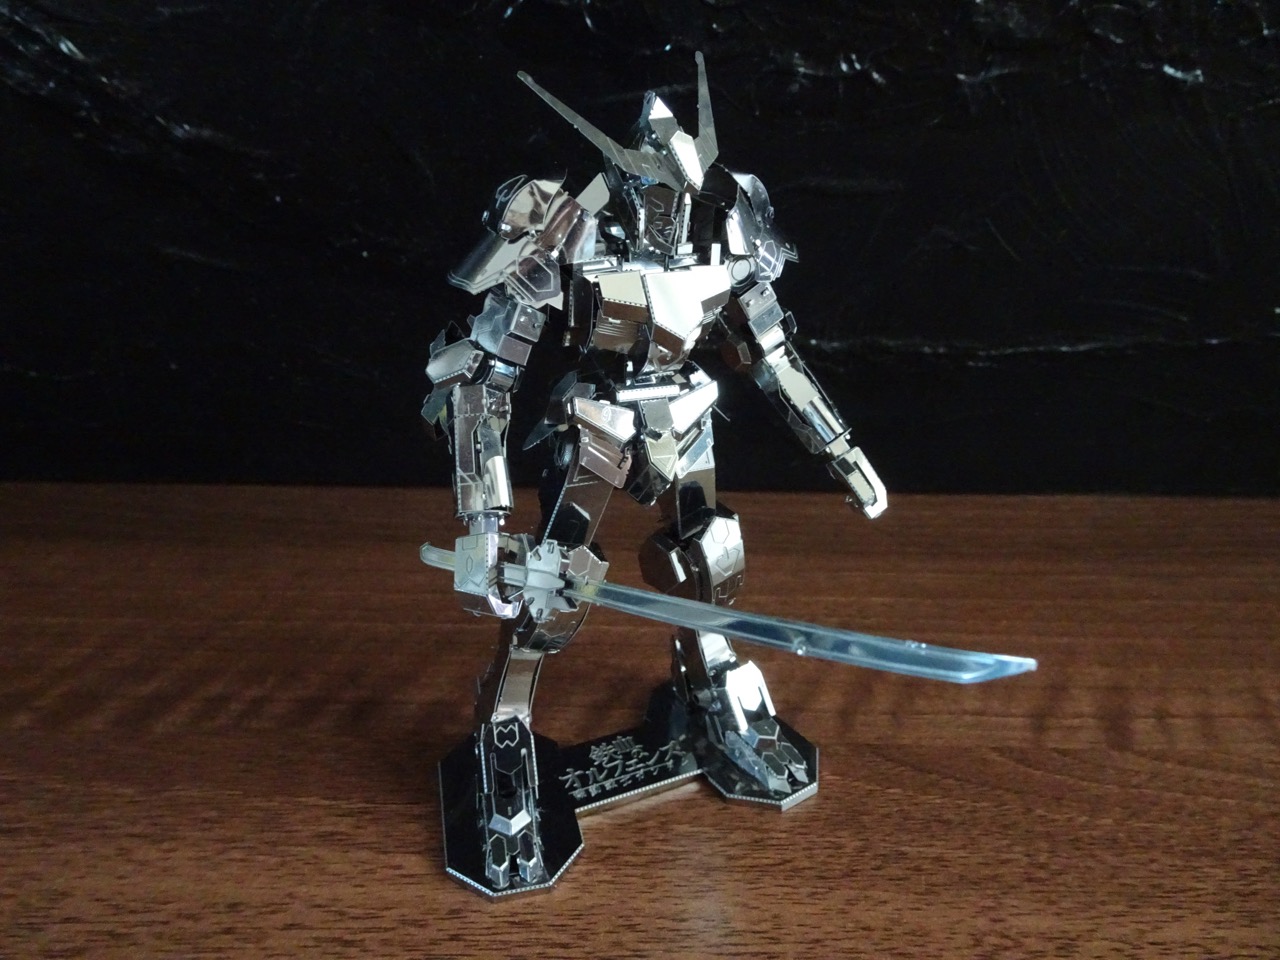 Fascinations ICONX 101 Rx-78-2 Gundam 3d Metal Model Kit for sale online 